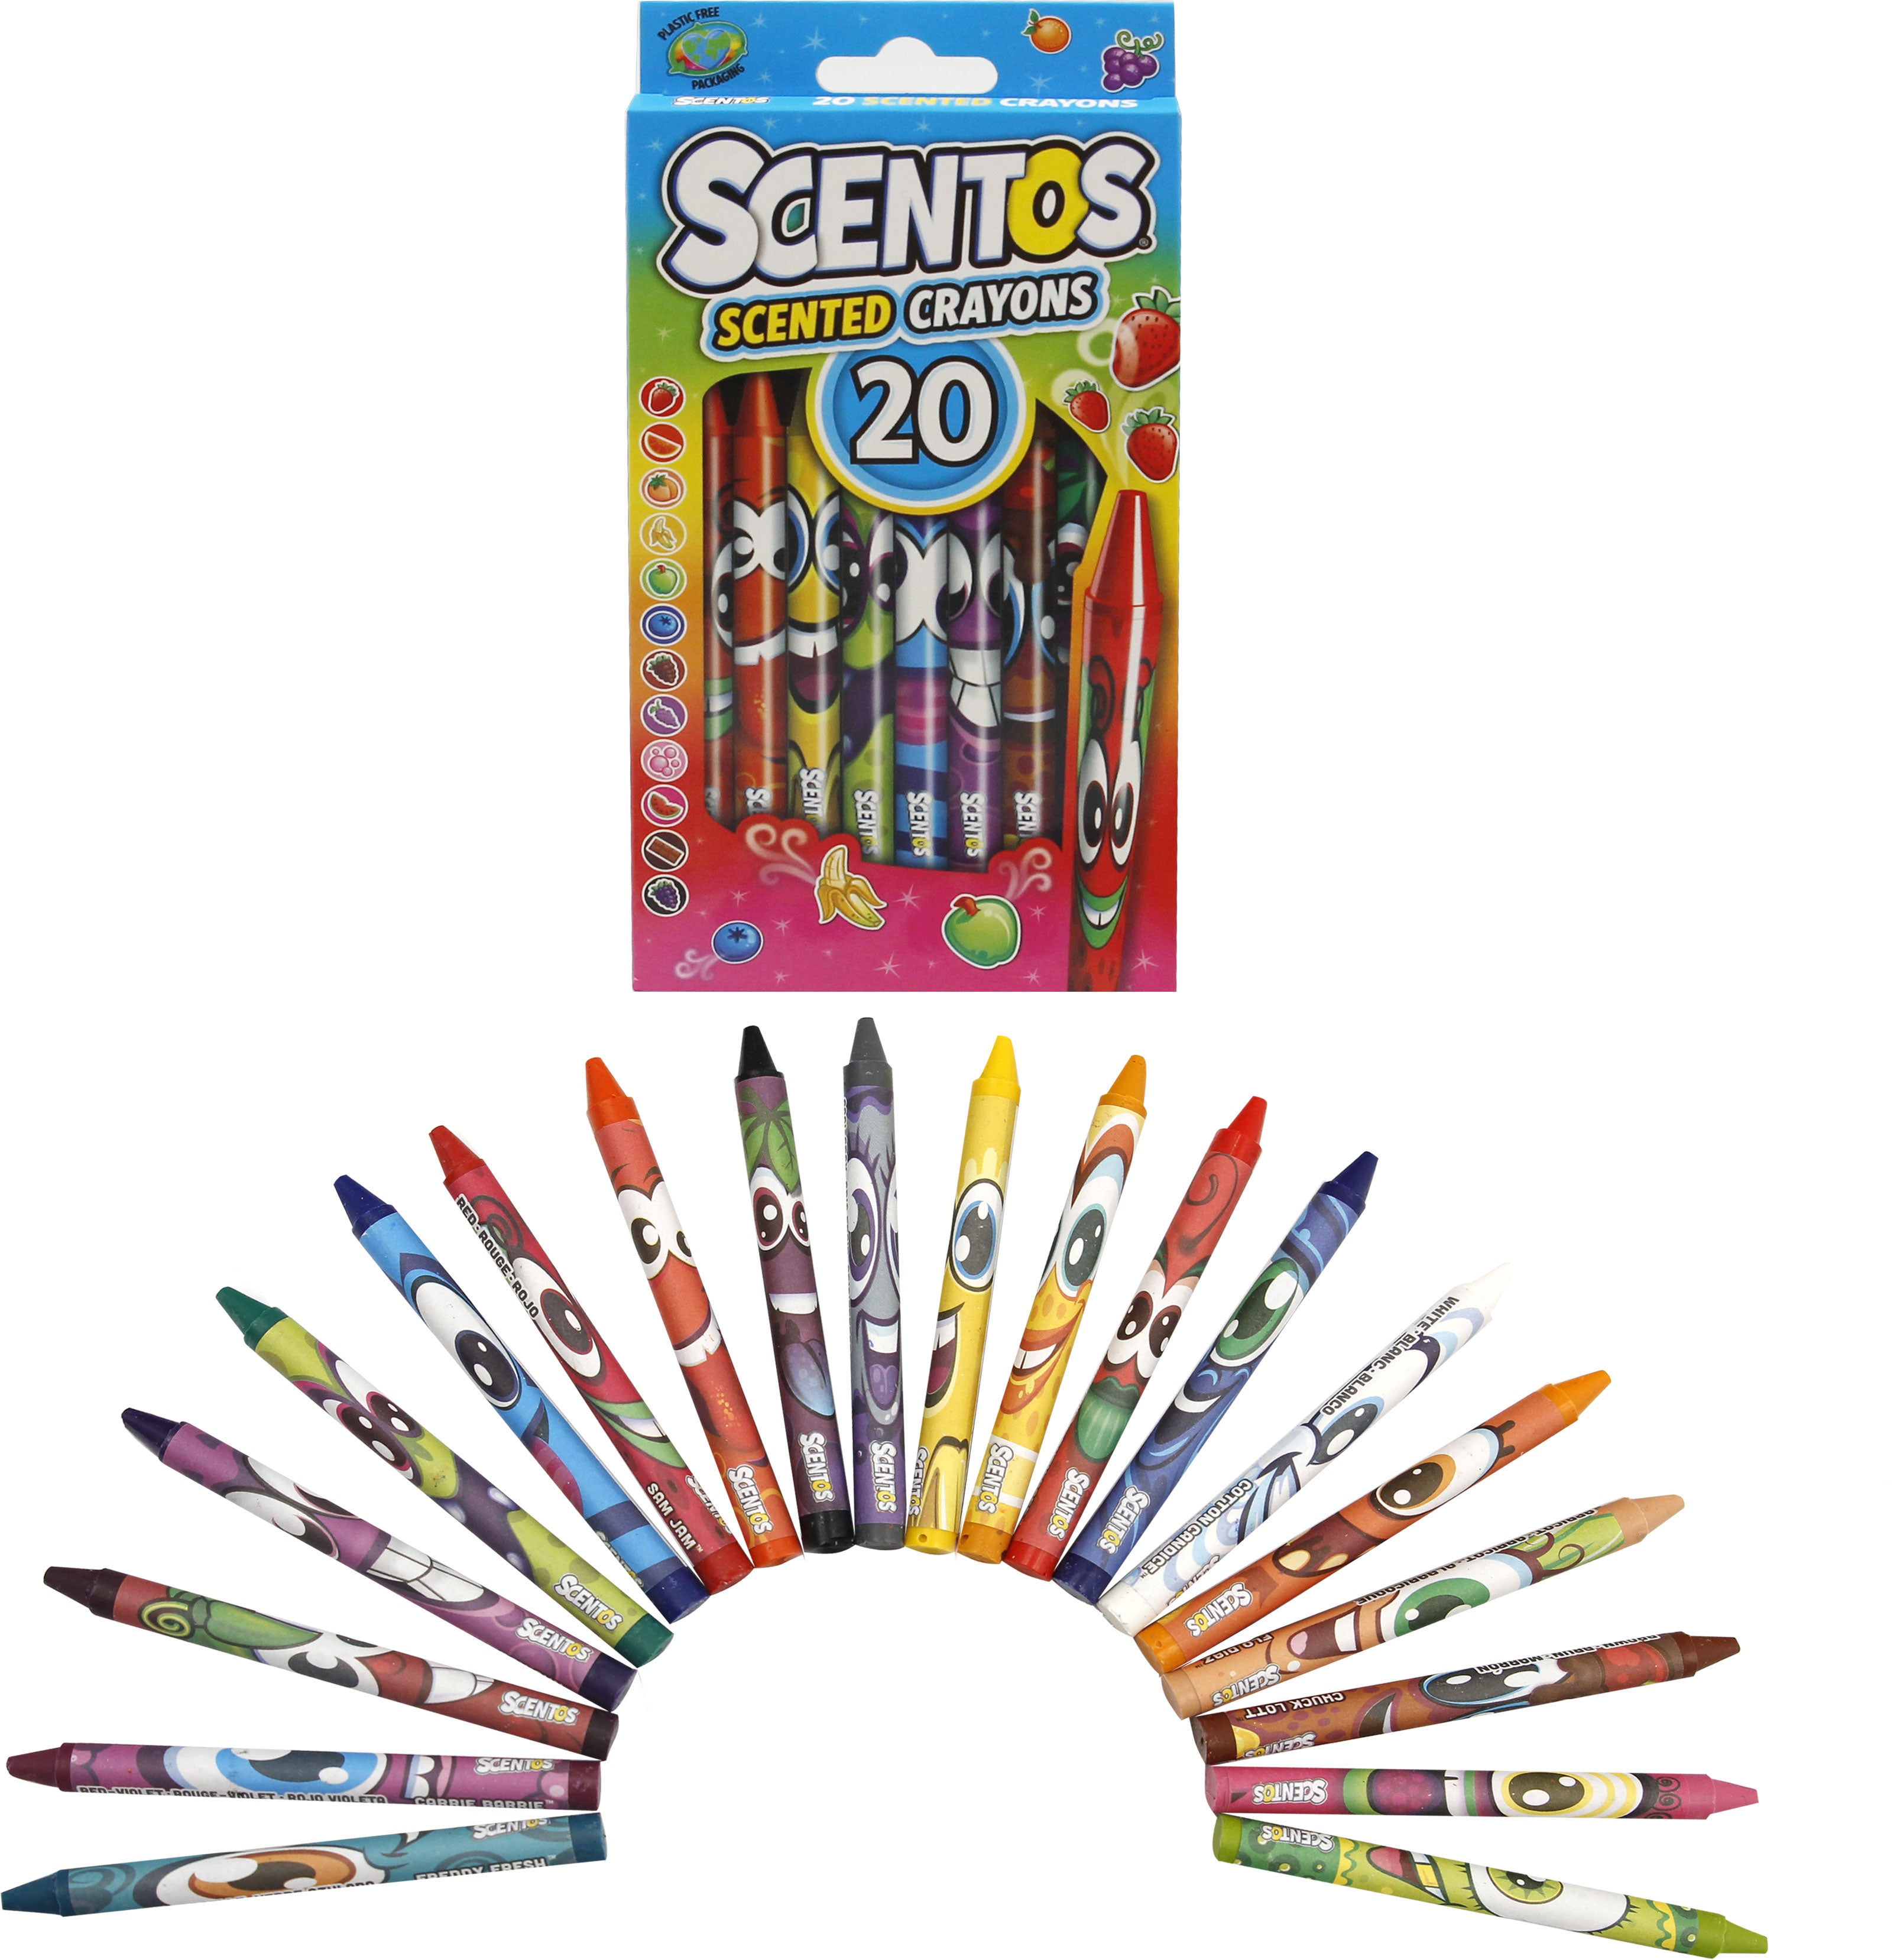 Scentos Scented 20 Crayons